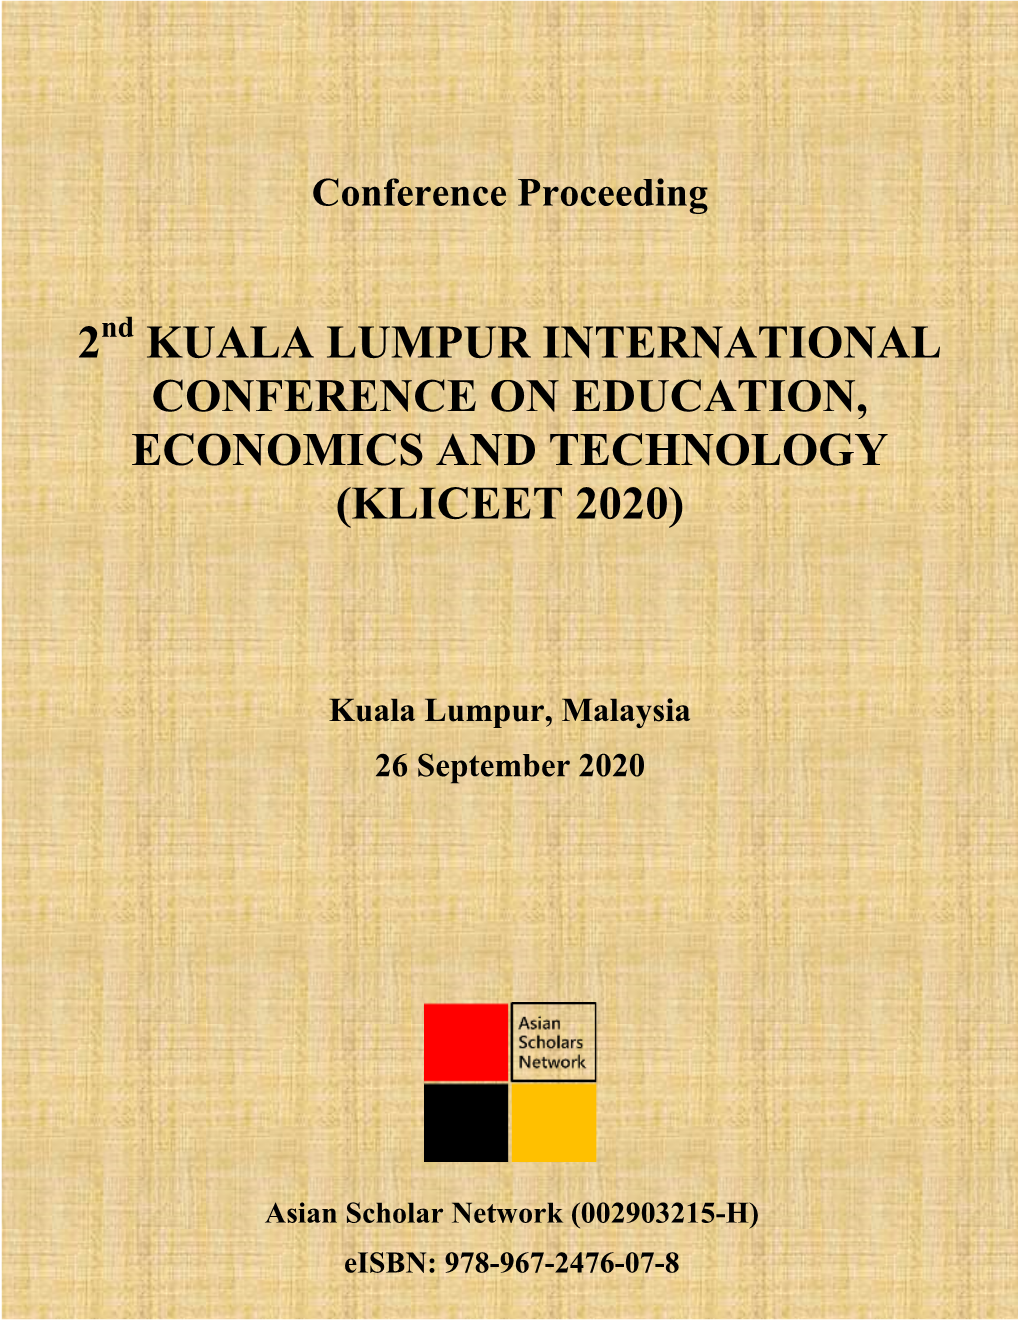 Kuala Lumpur International Conference on Education, Economics and Technology (Kliceet 2020)